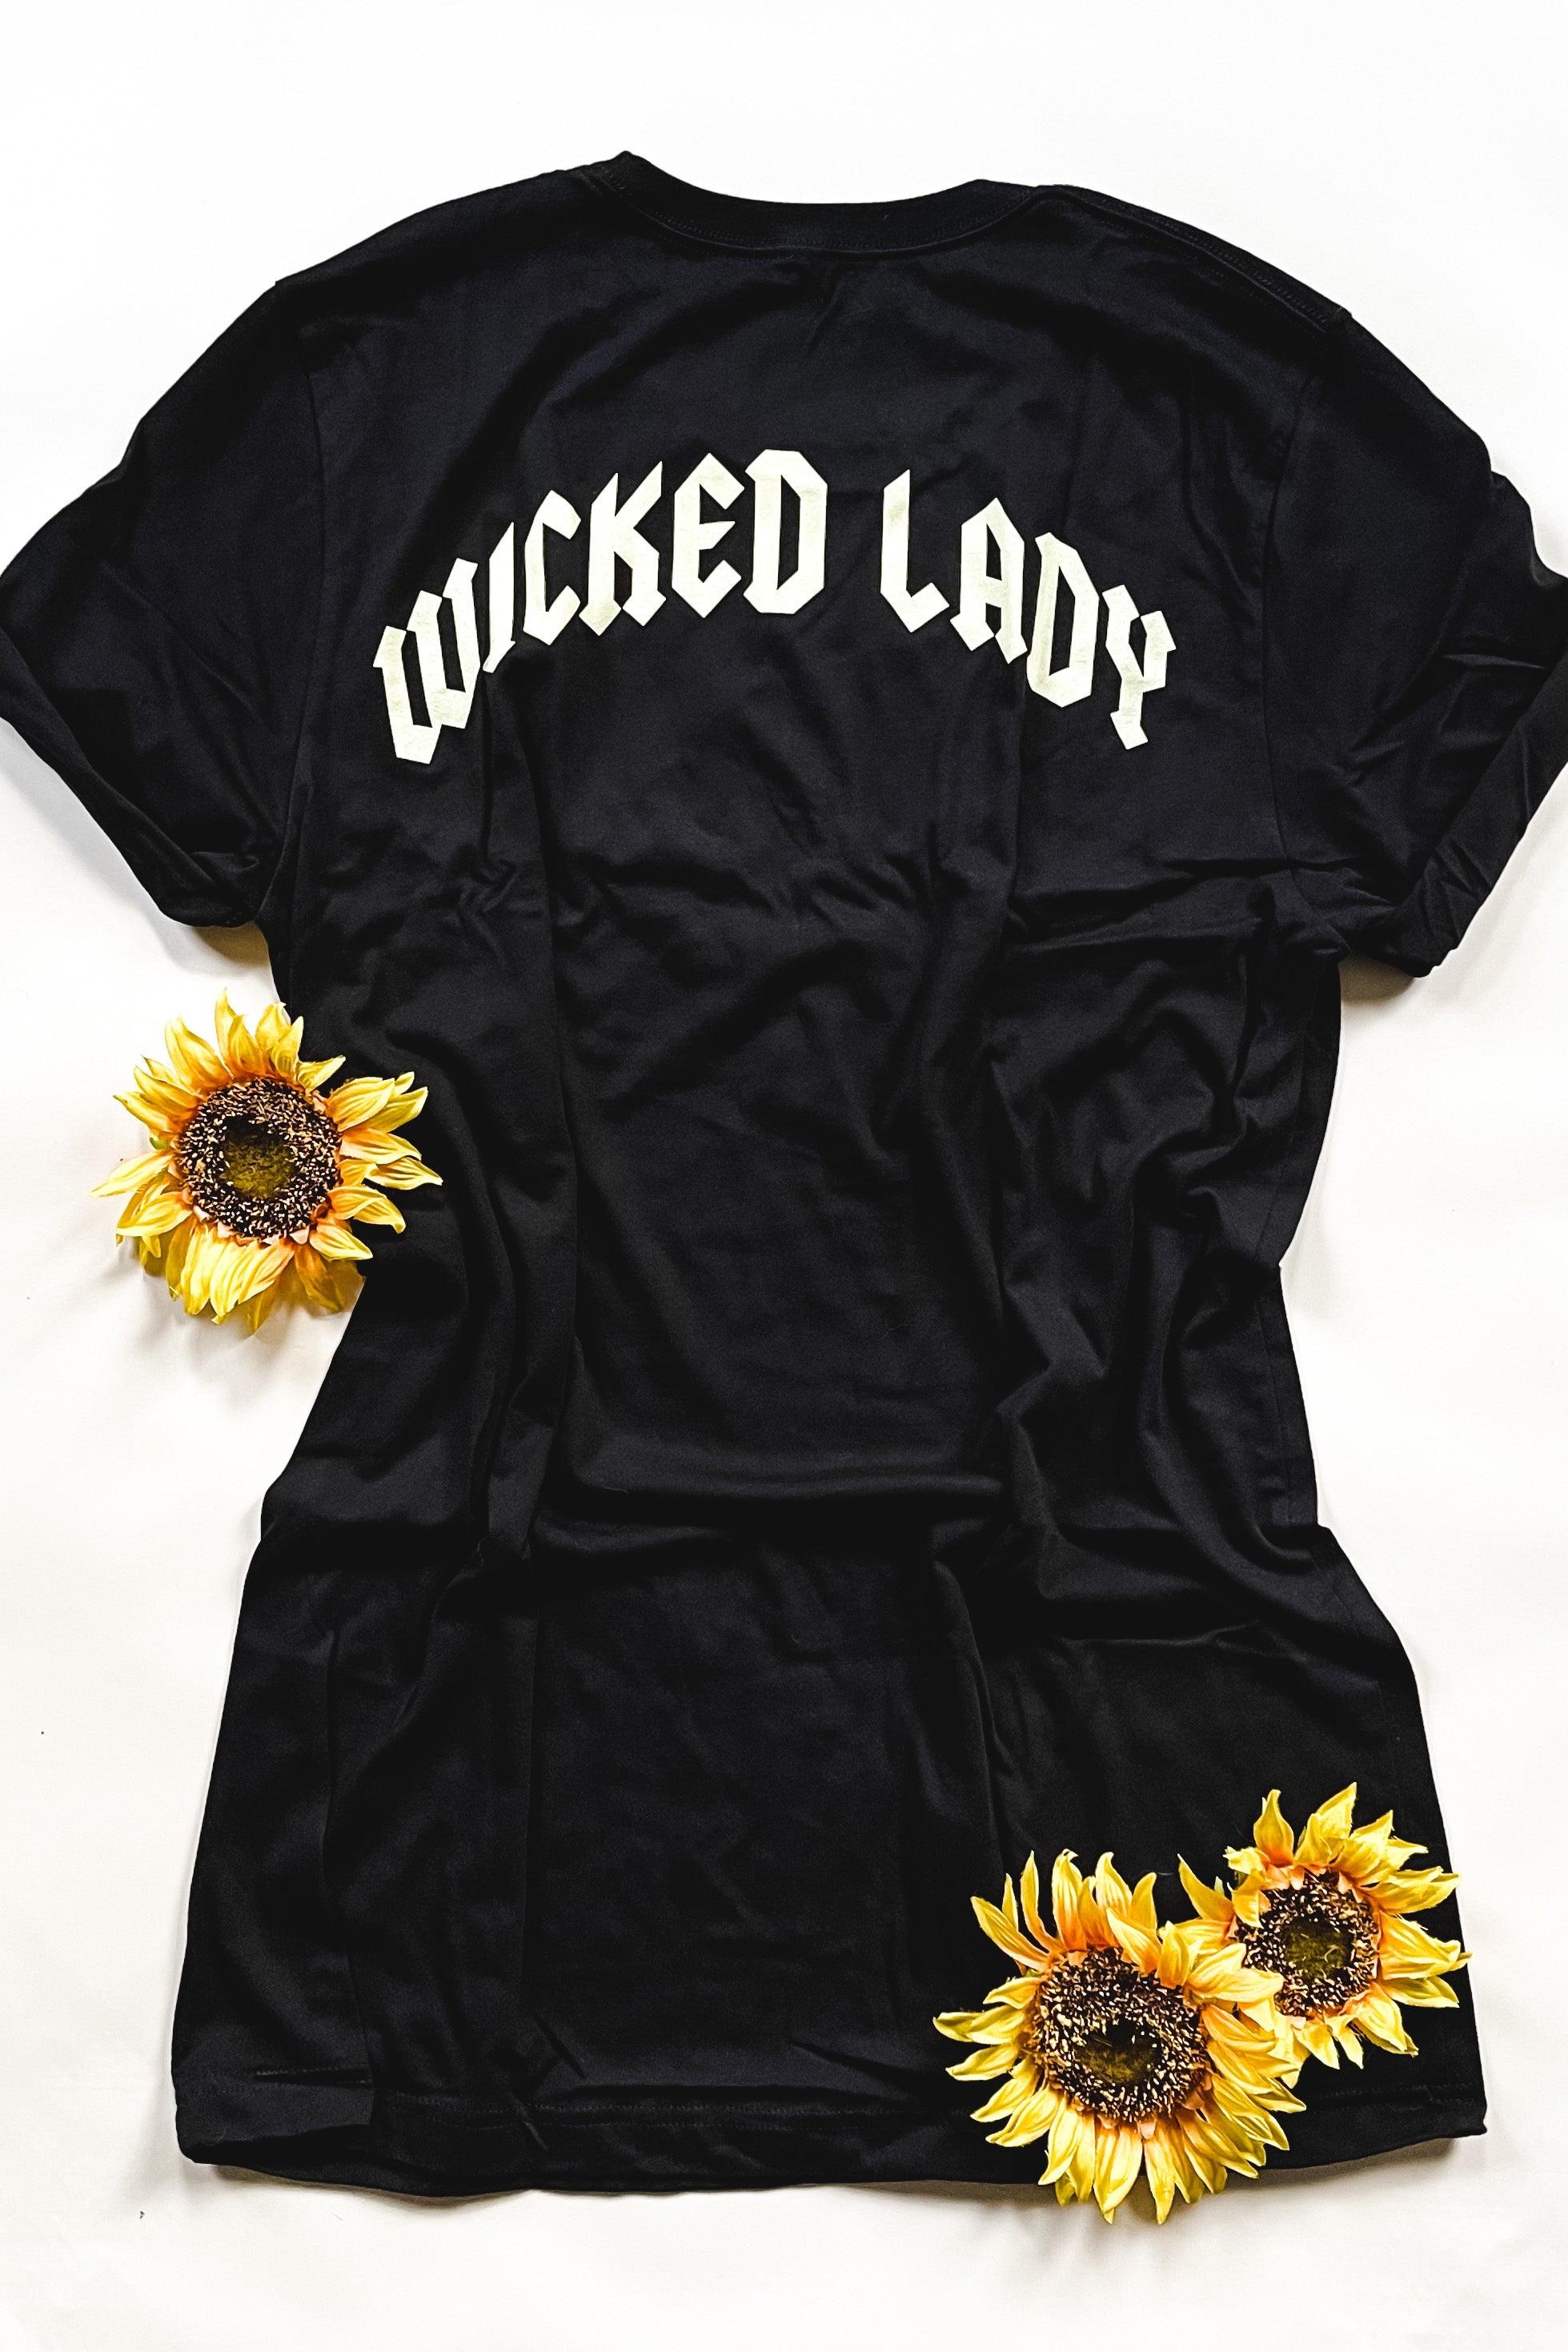 Wicked Lady Tee - Atomic Wildflower